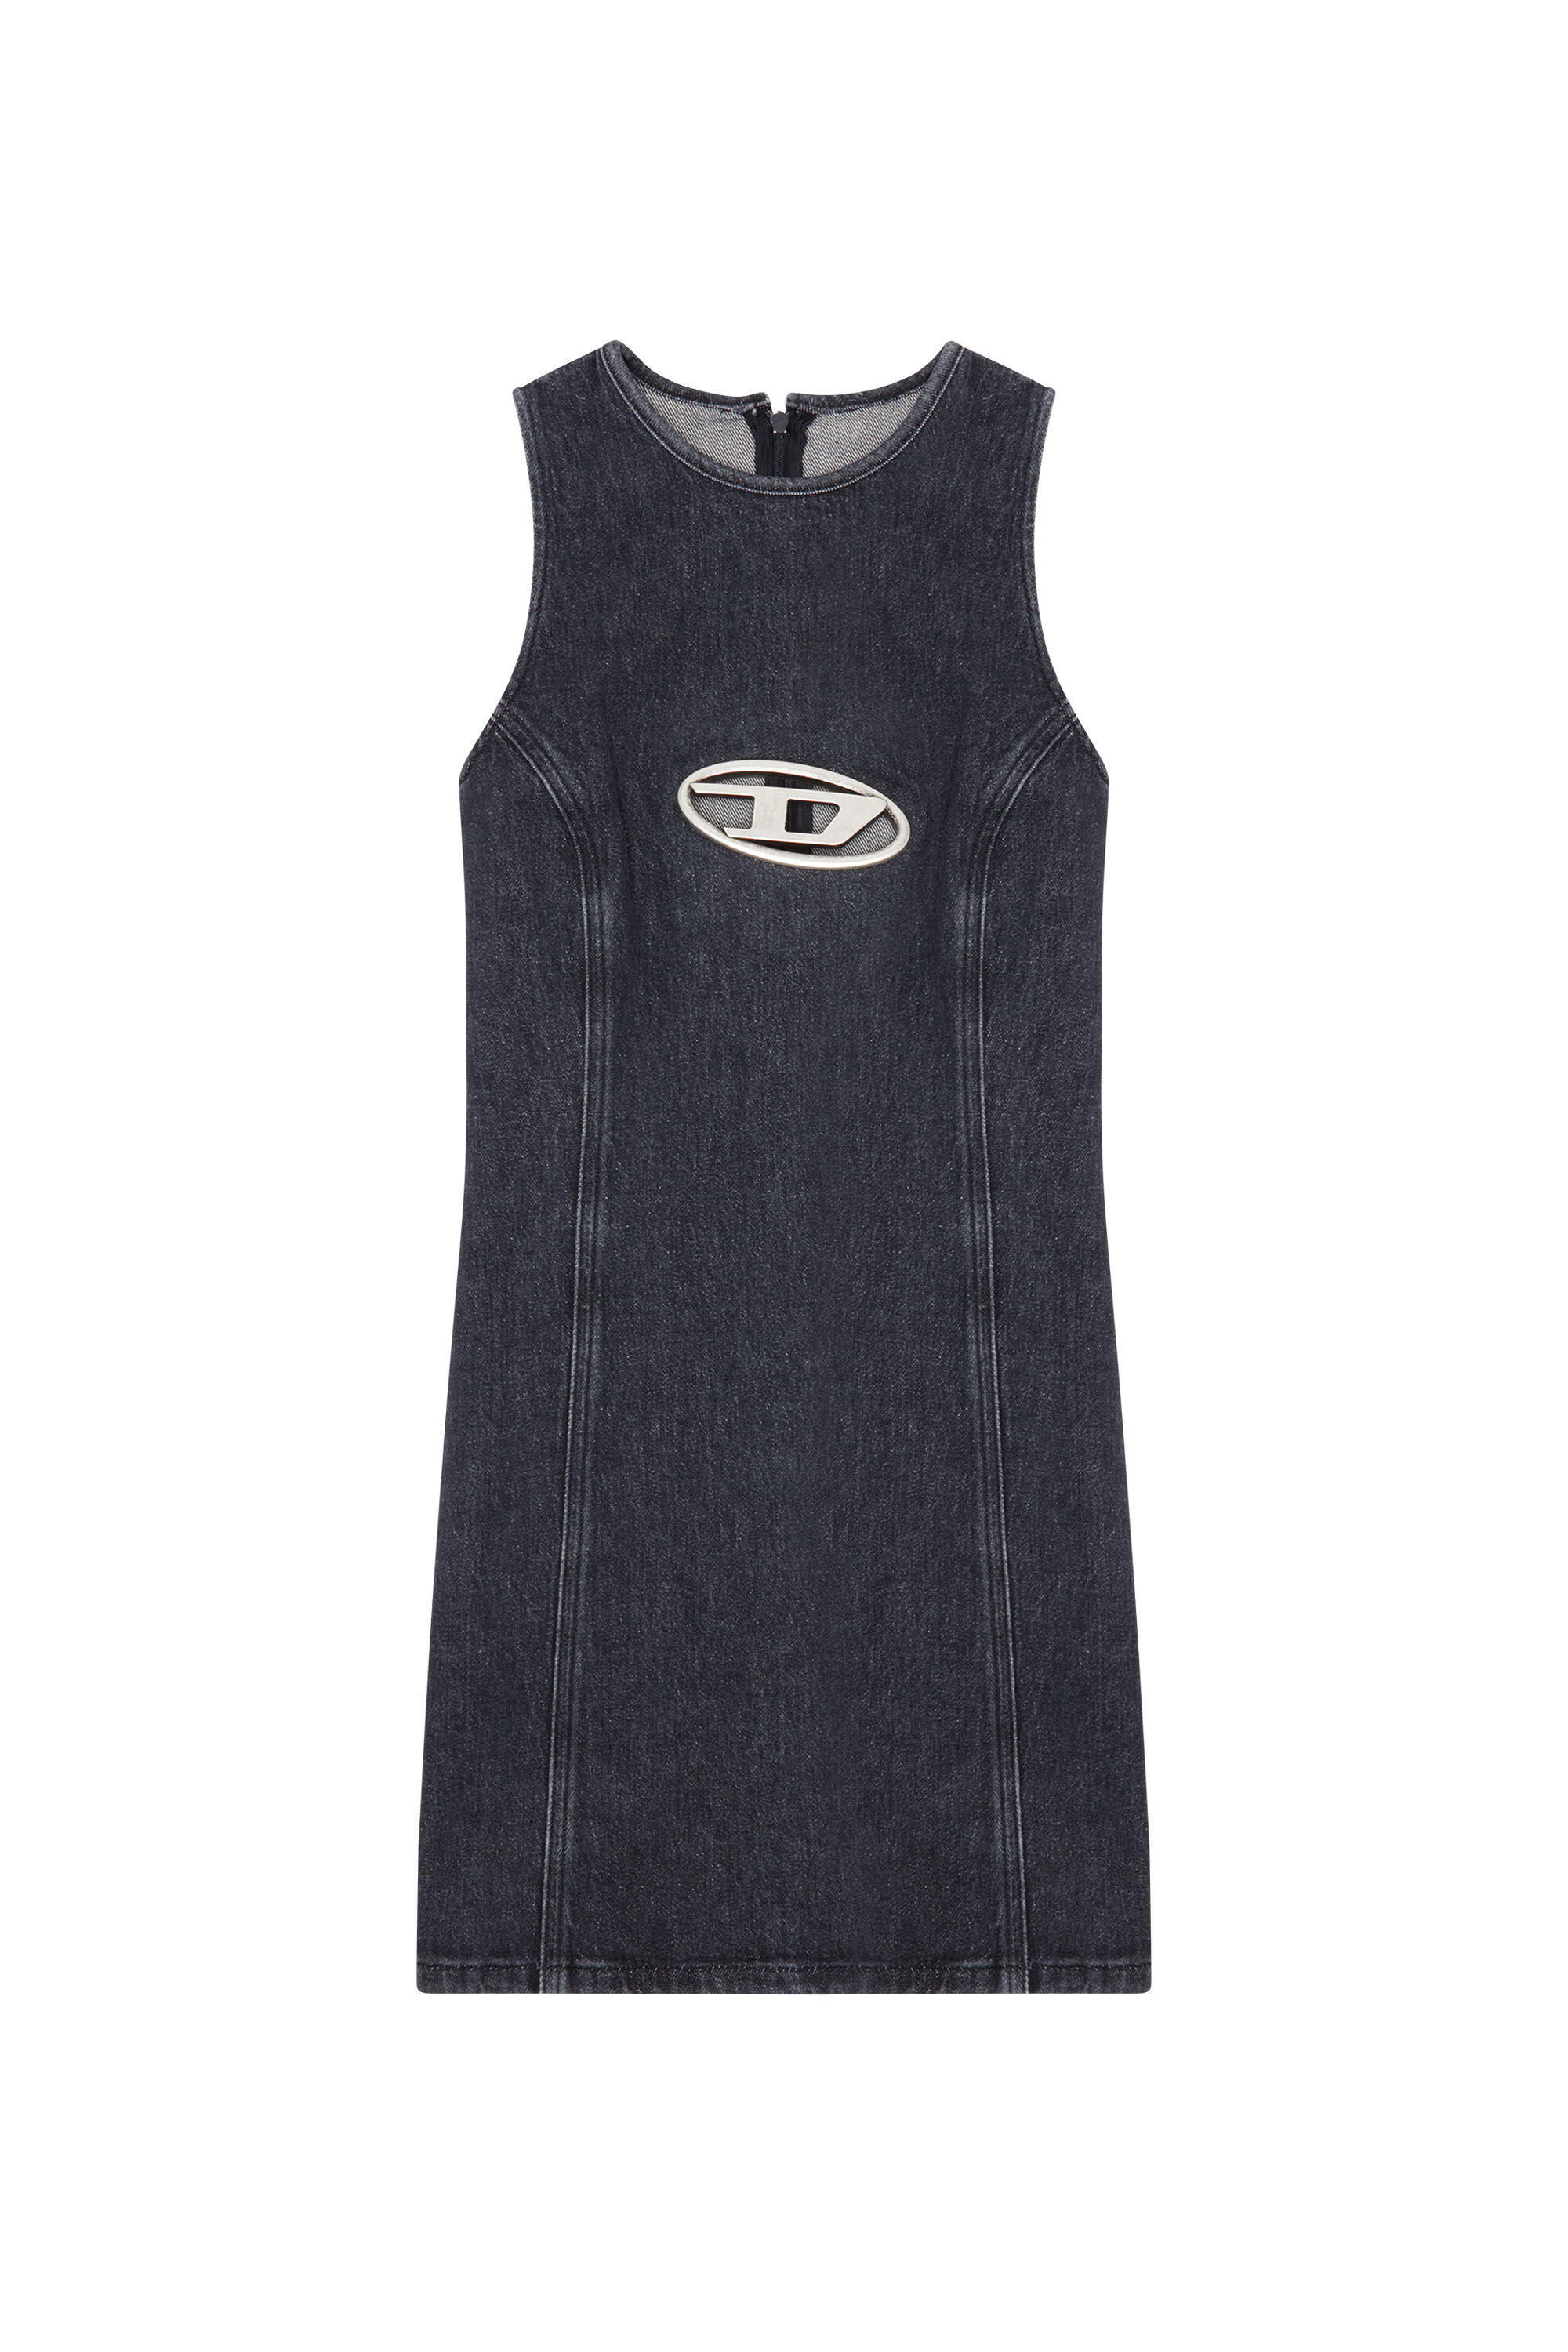 Women's Denim mini dress with Oval D plaque | Black | Diesel